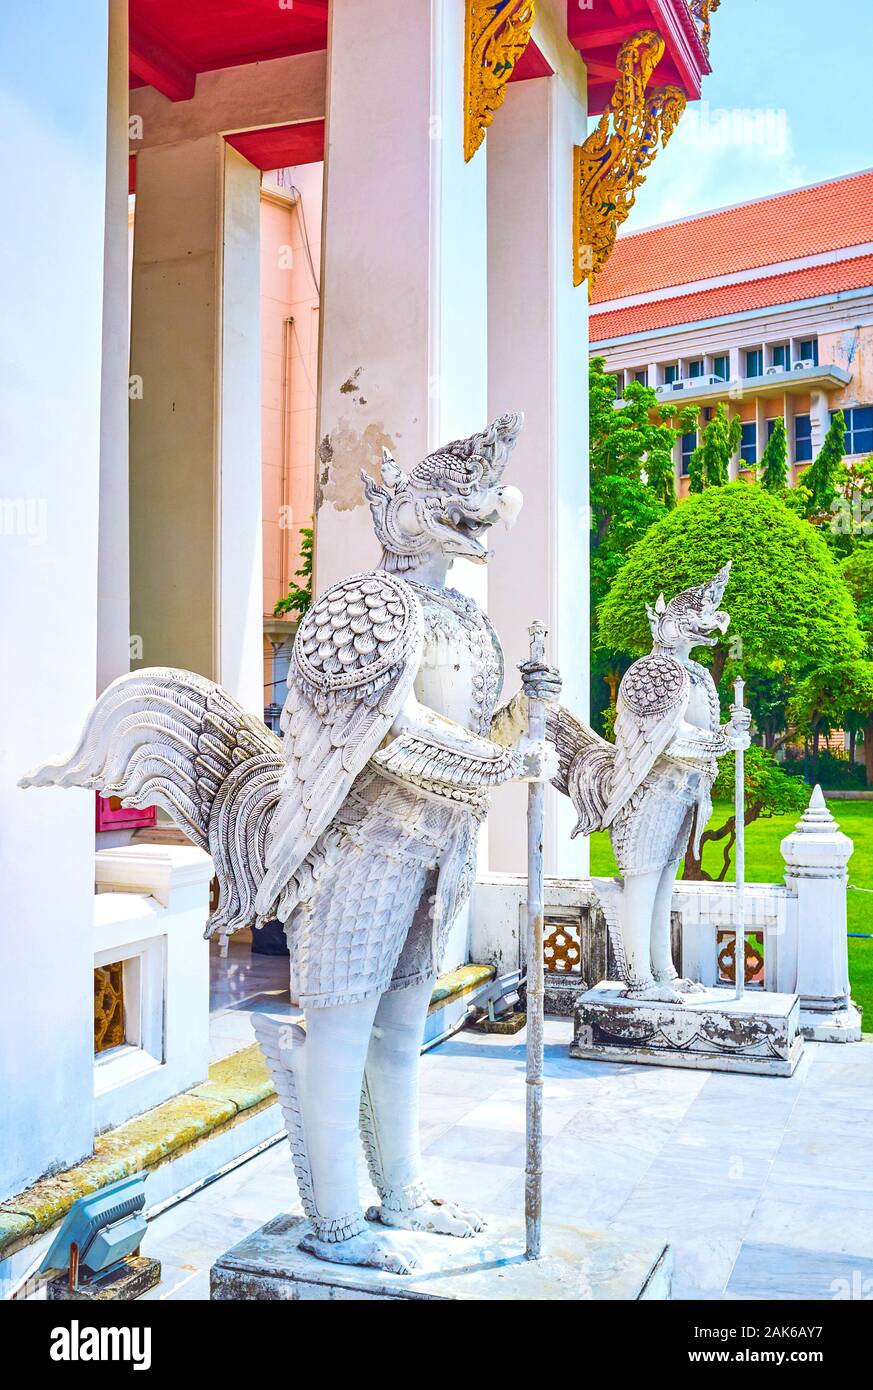 BANGKOK, THAILAND - APRIL 15, 2019: The group of guardians, the Garudas, standing at the main entrance to  Phuttaisawan Royal Hall in National Museum Stock Photo